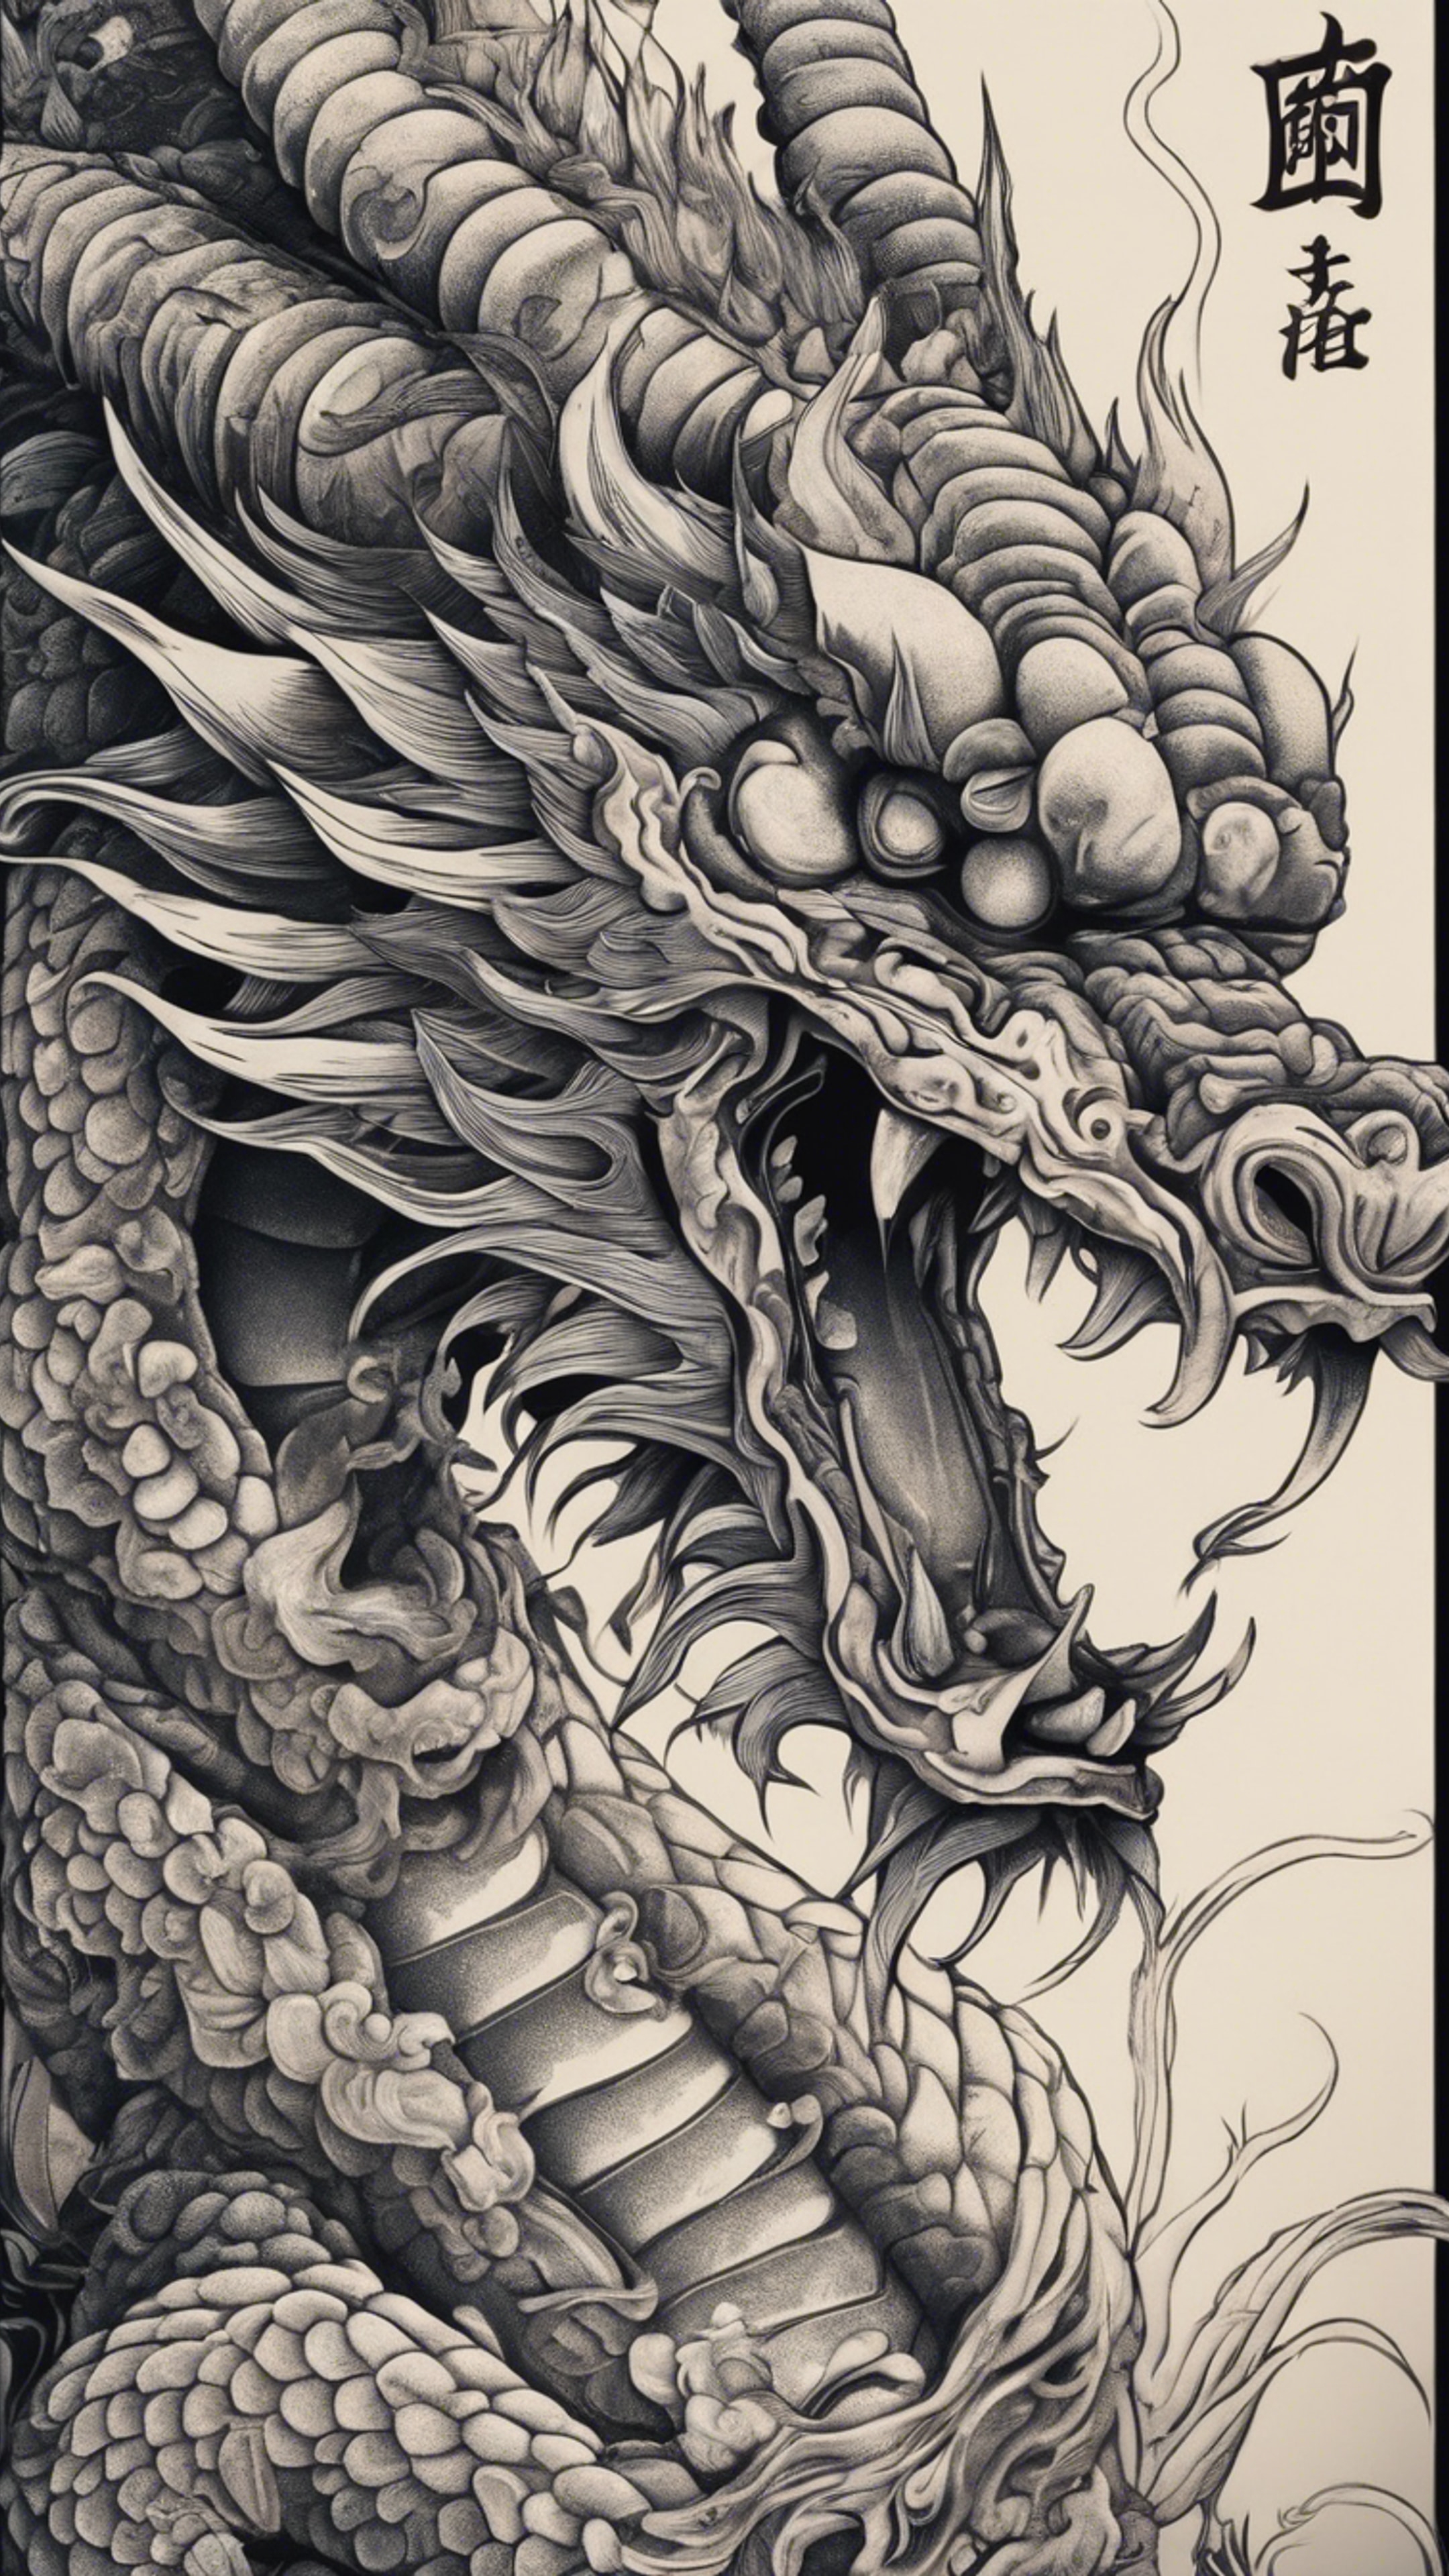 A Japanese dragon tattoo design with intricate details. Behang[fa4ff1f2e6c24a2f94e4]